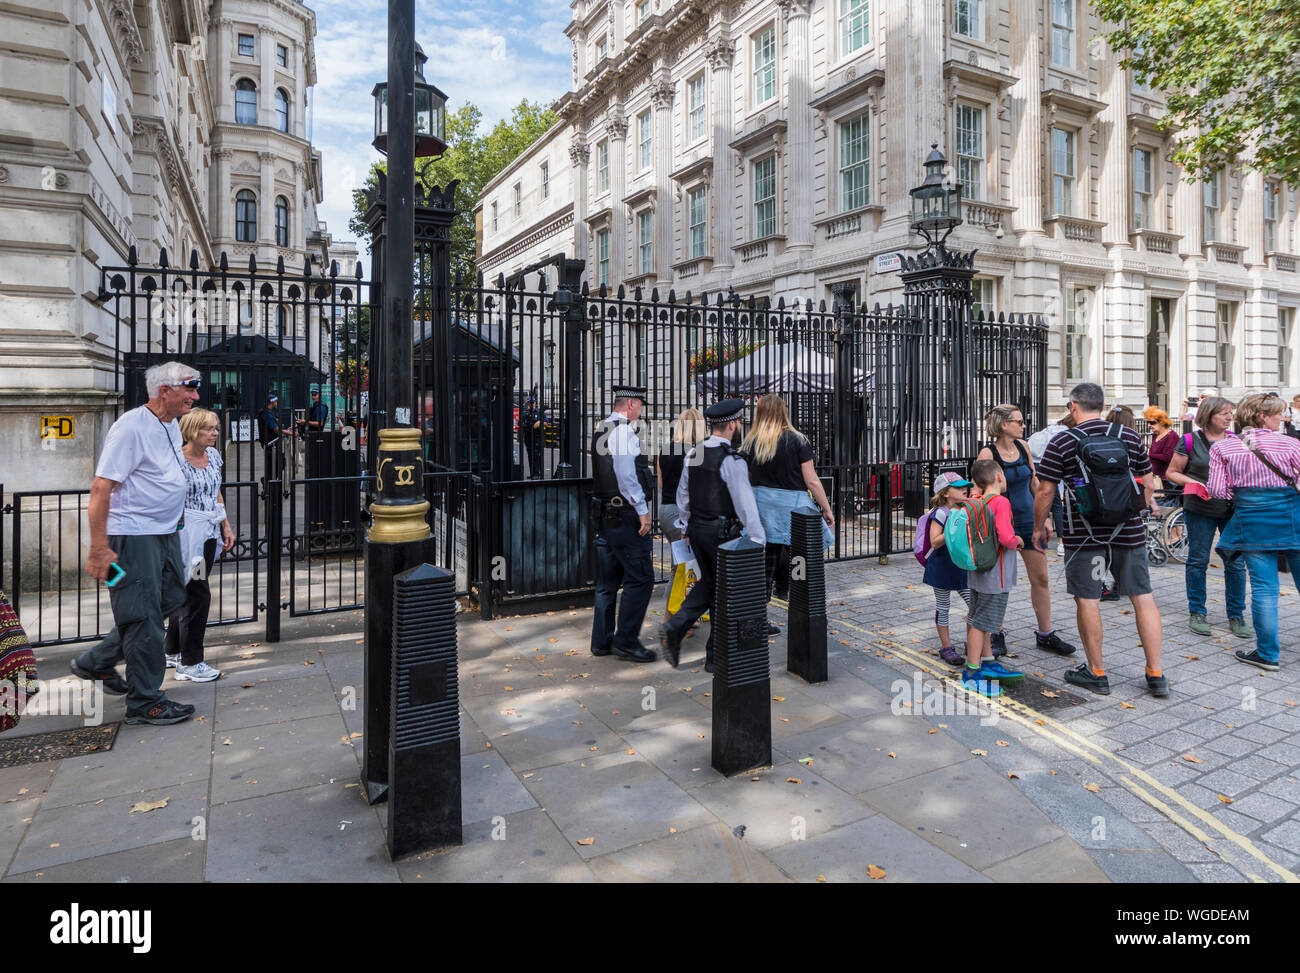 Polizei bewacht Sicherheit Tor am Eingang zur Downing Street, Westminster, London, England, UK. Stockfoto